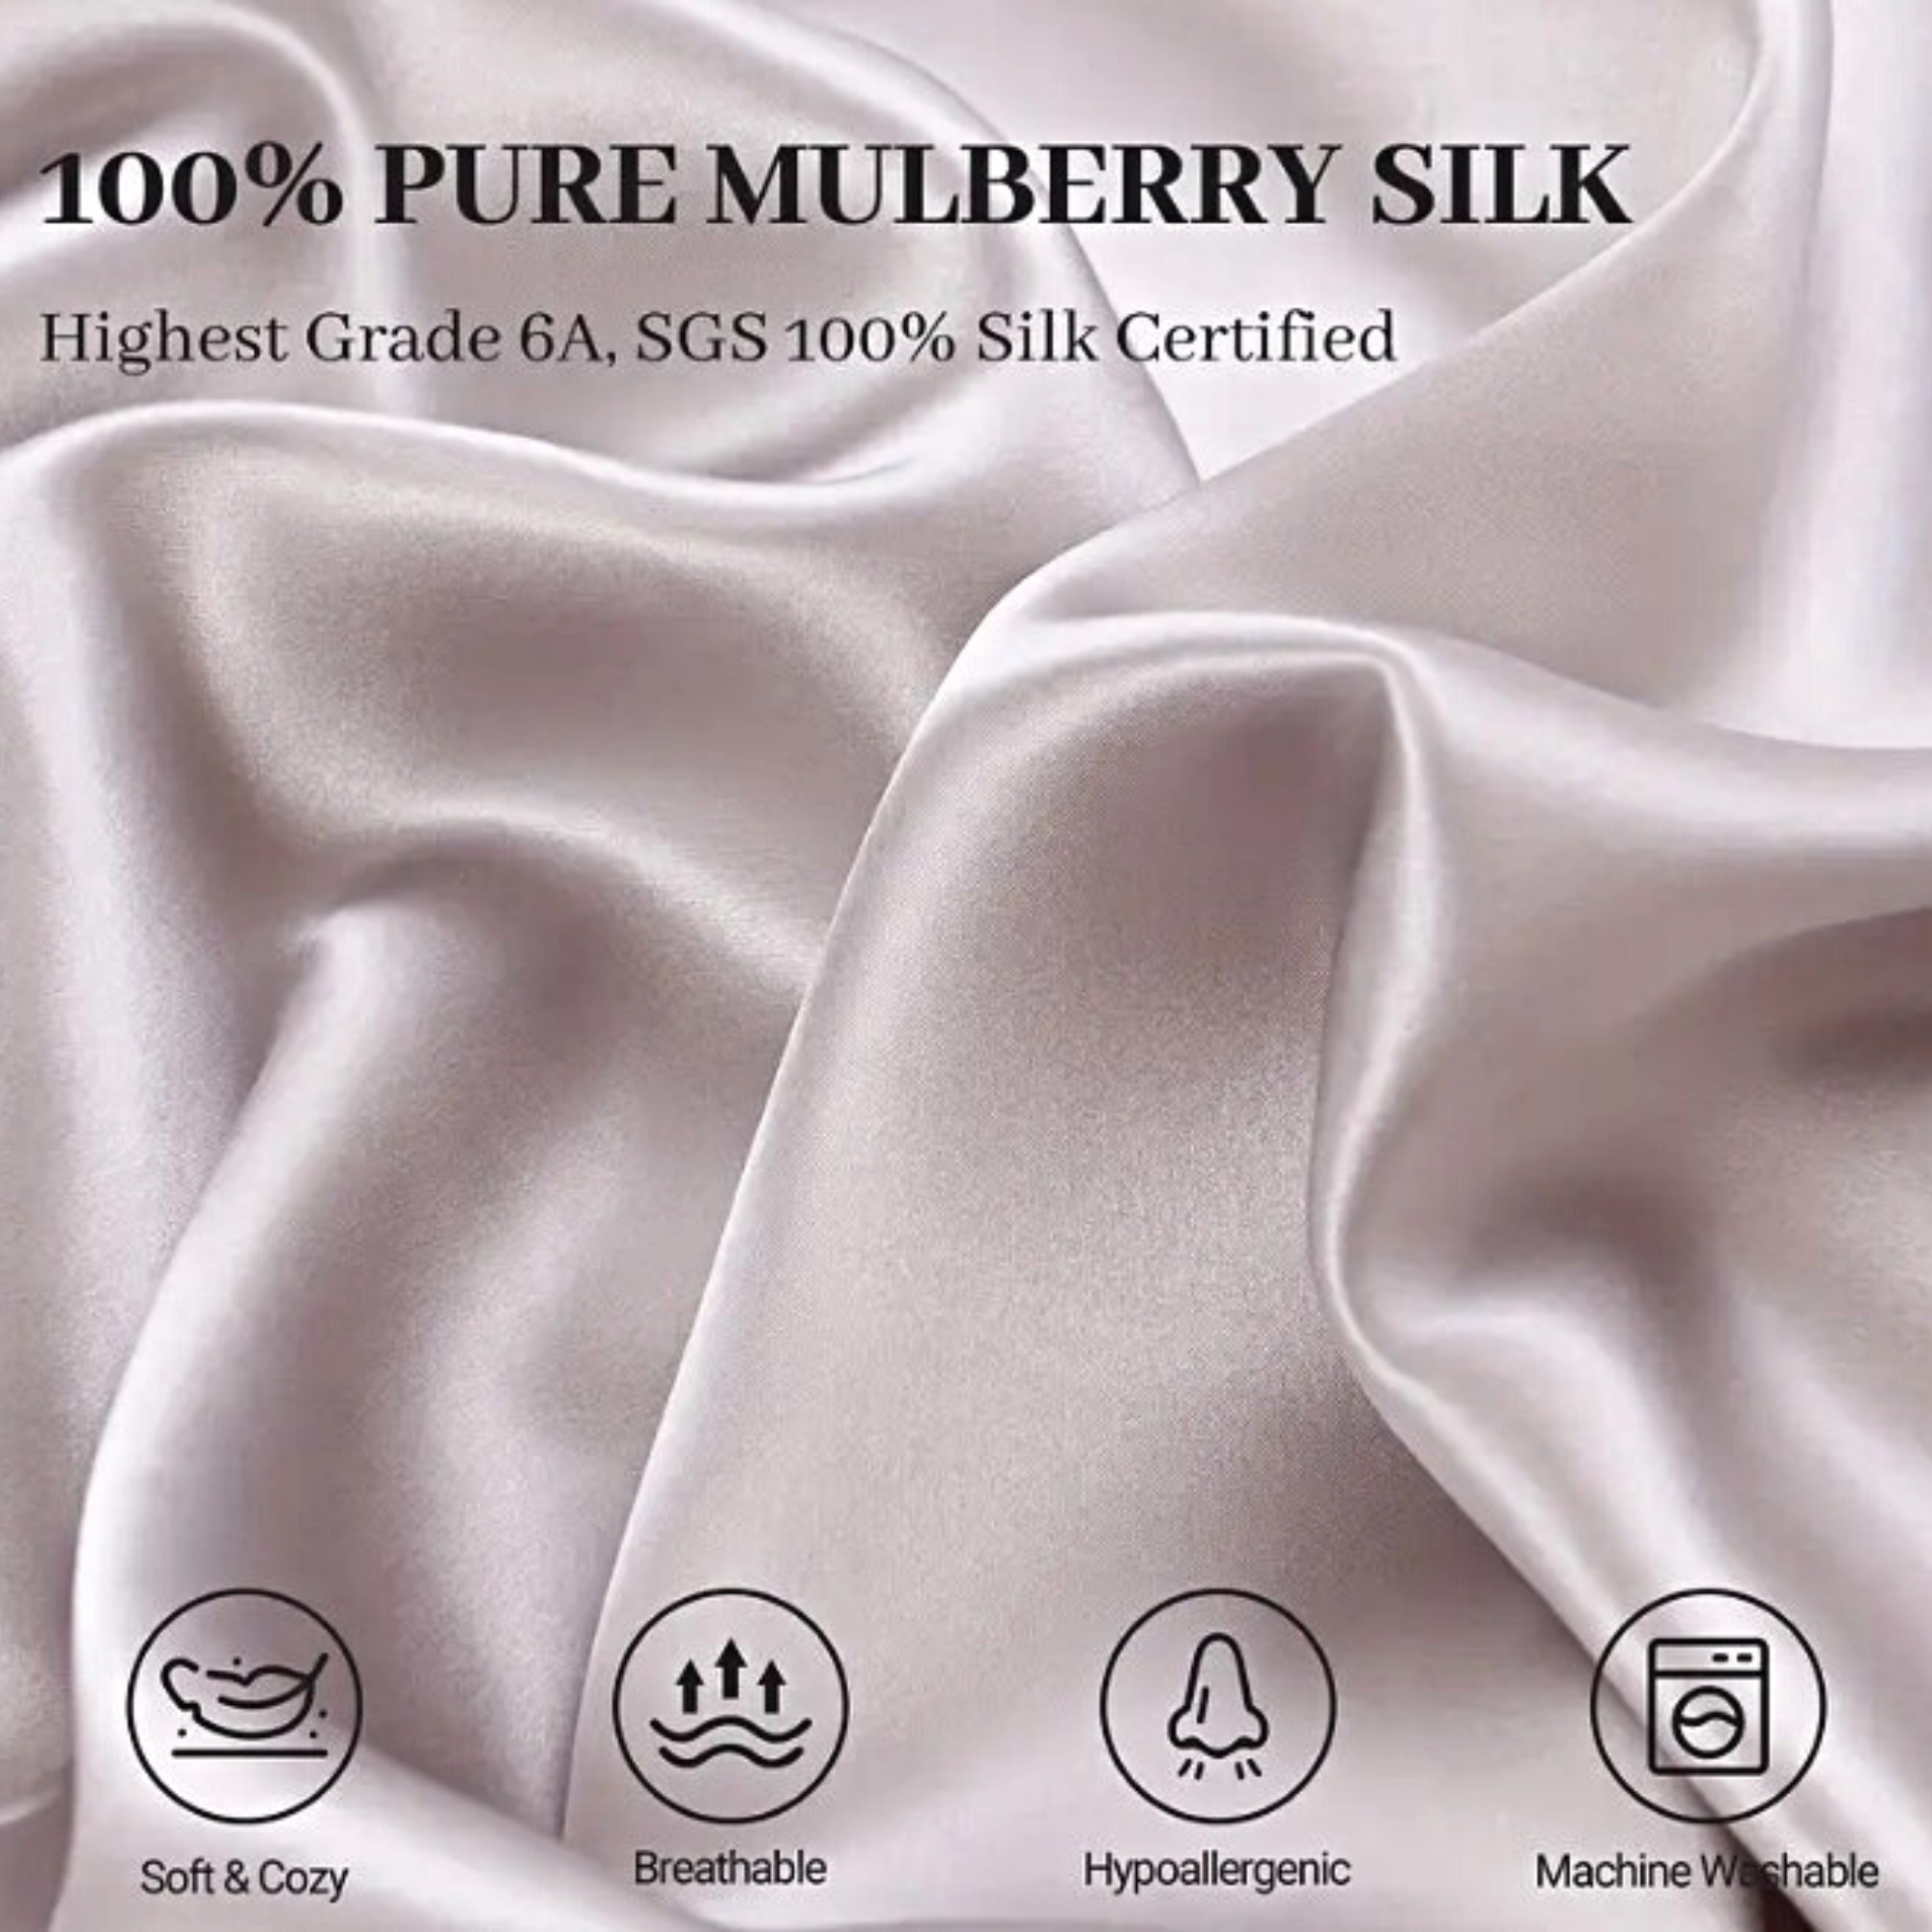 Mulberry Silk Mum Gift Set